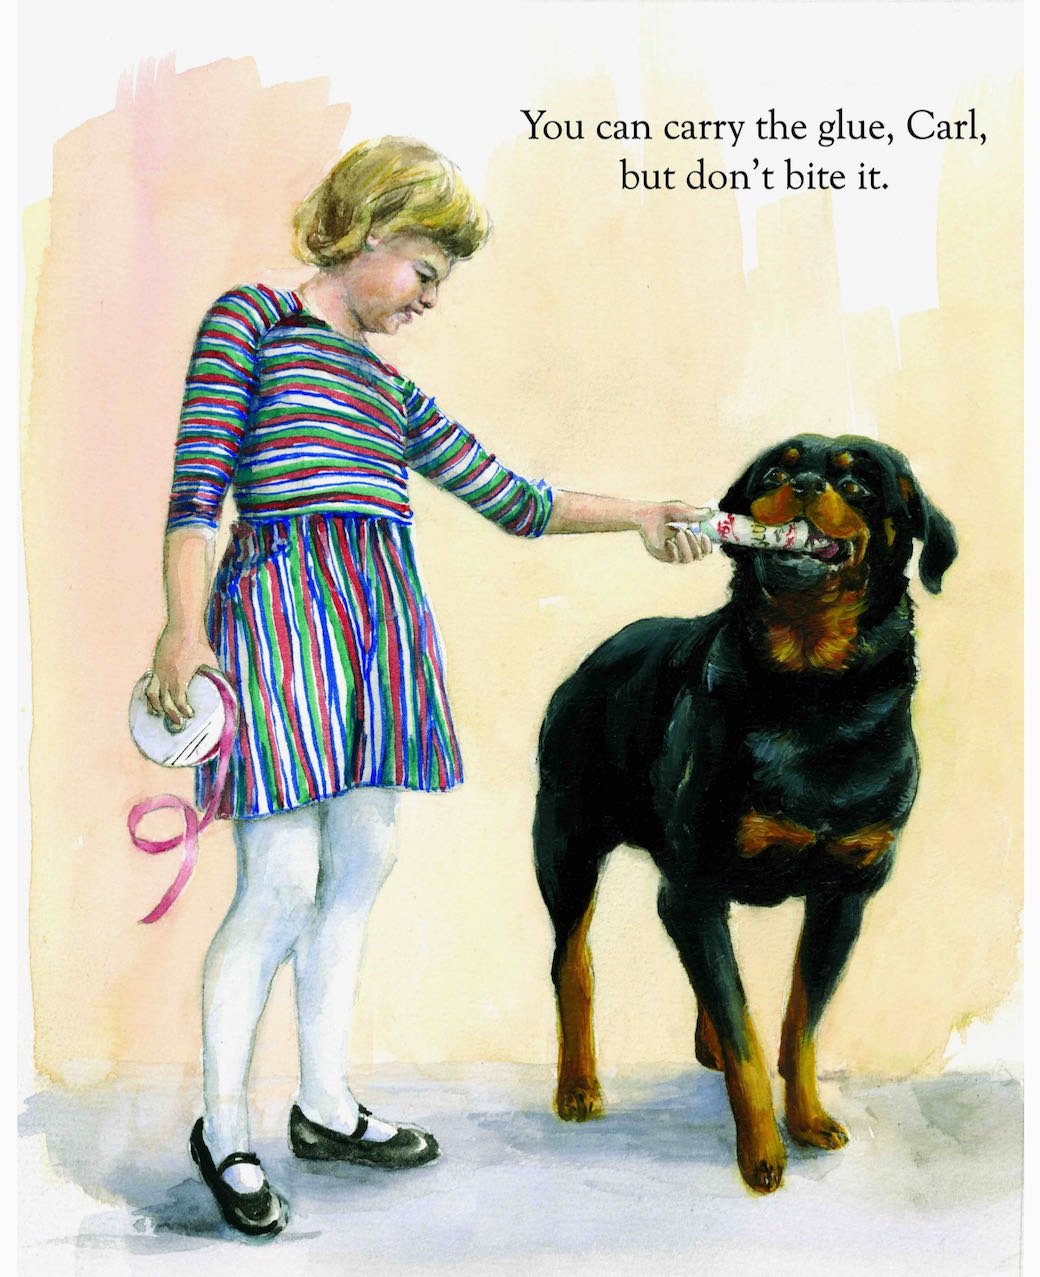 Good Dog Carl Helps Make a Valentine Children's Book - Marmalade Mercantile